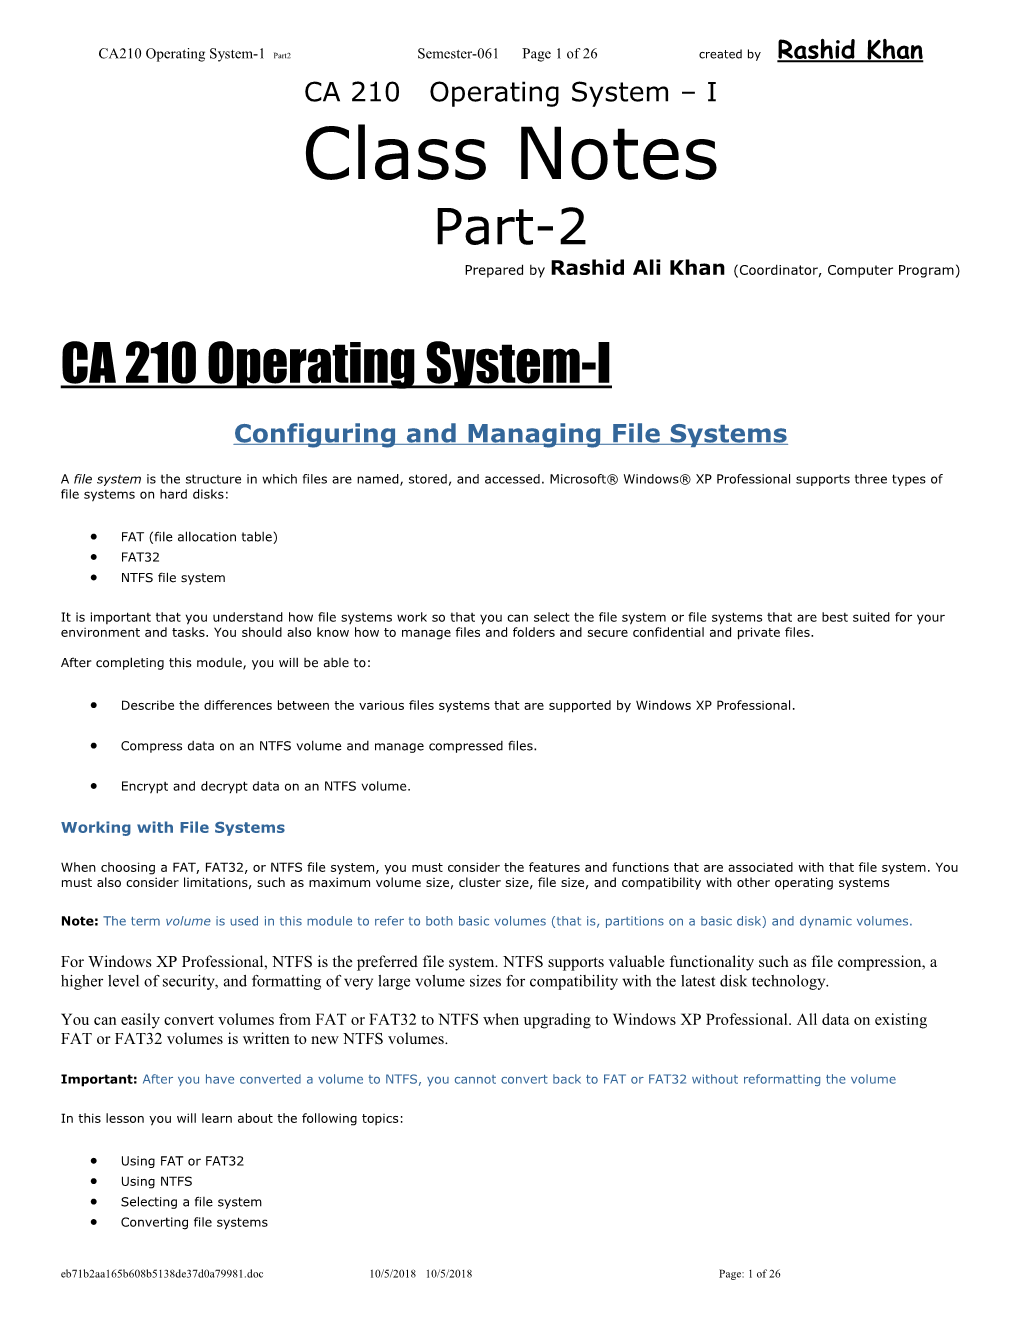 CA 210 Operating System I